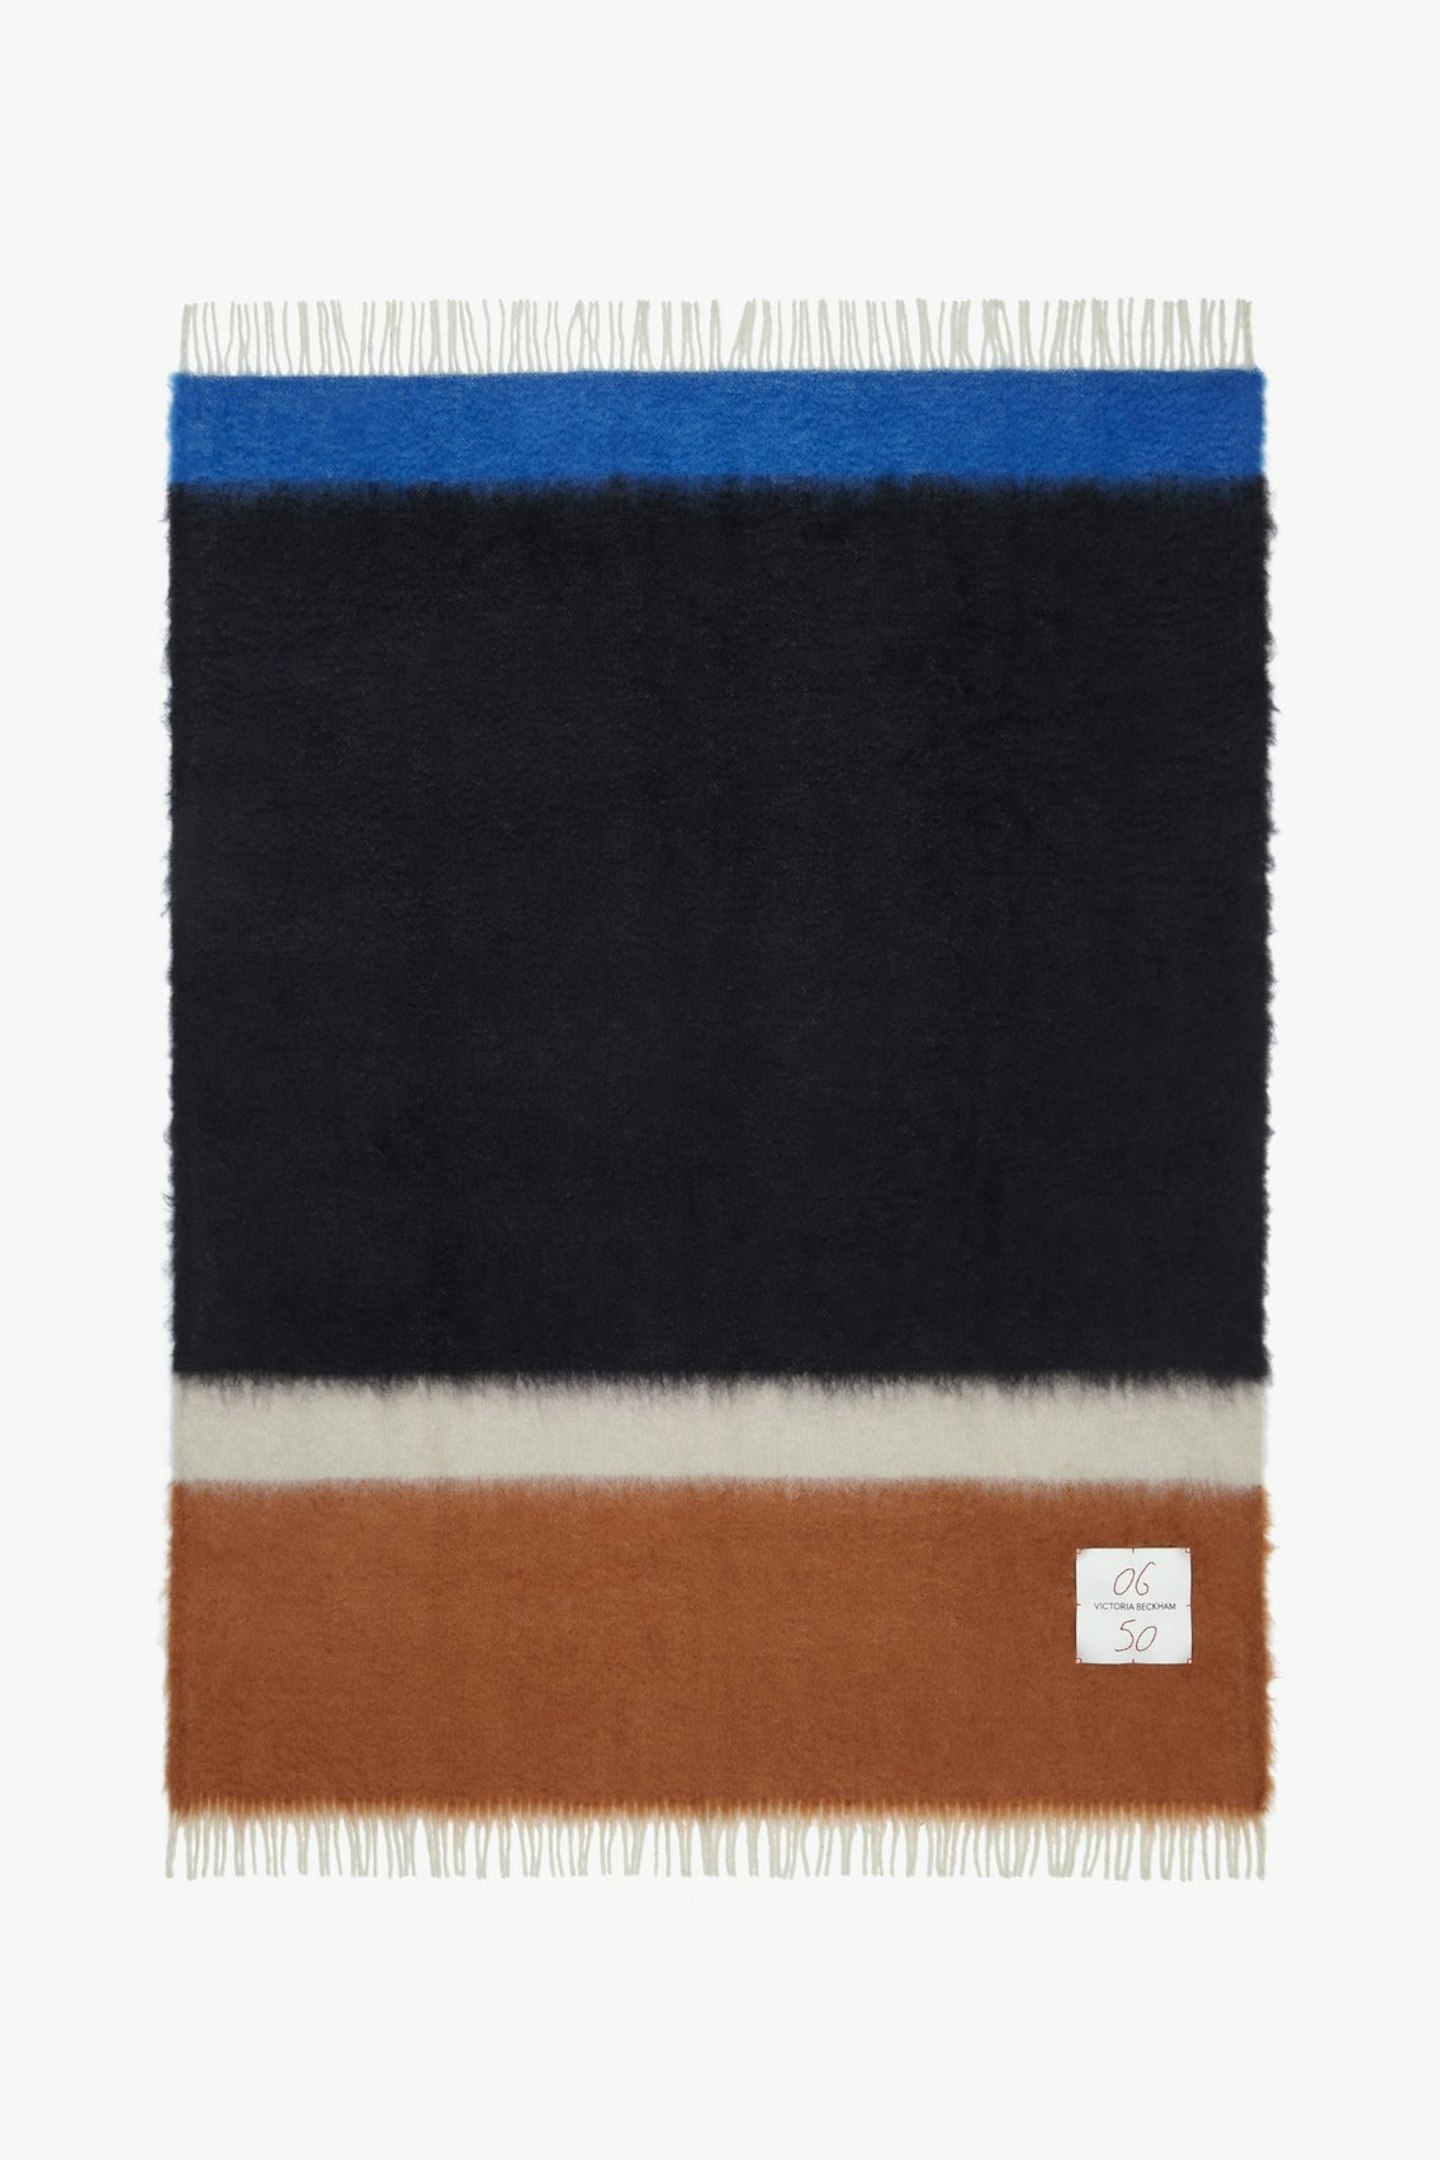 Victoria Beckham, Colour-Block Blanket In Blue-Black Multi, £350